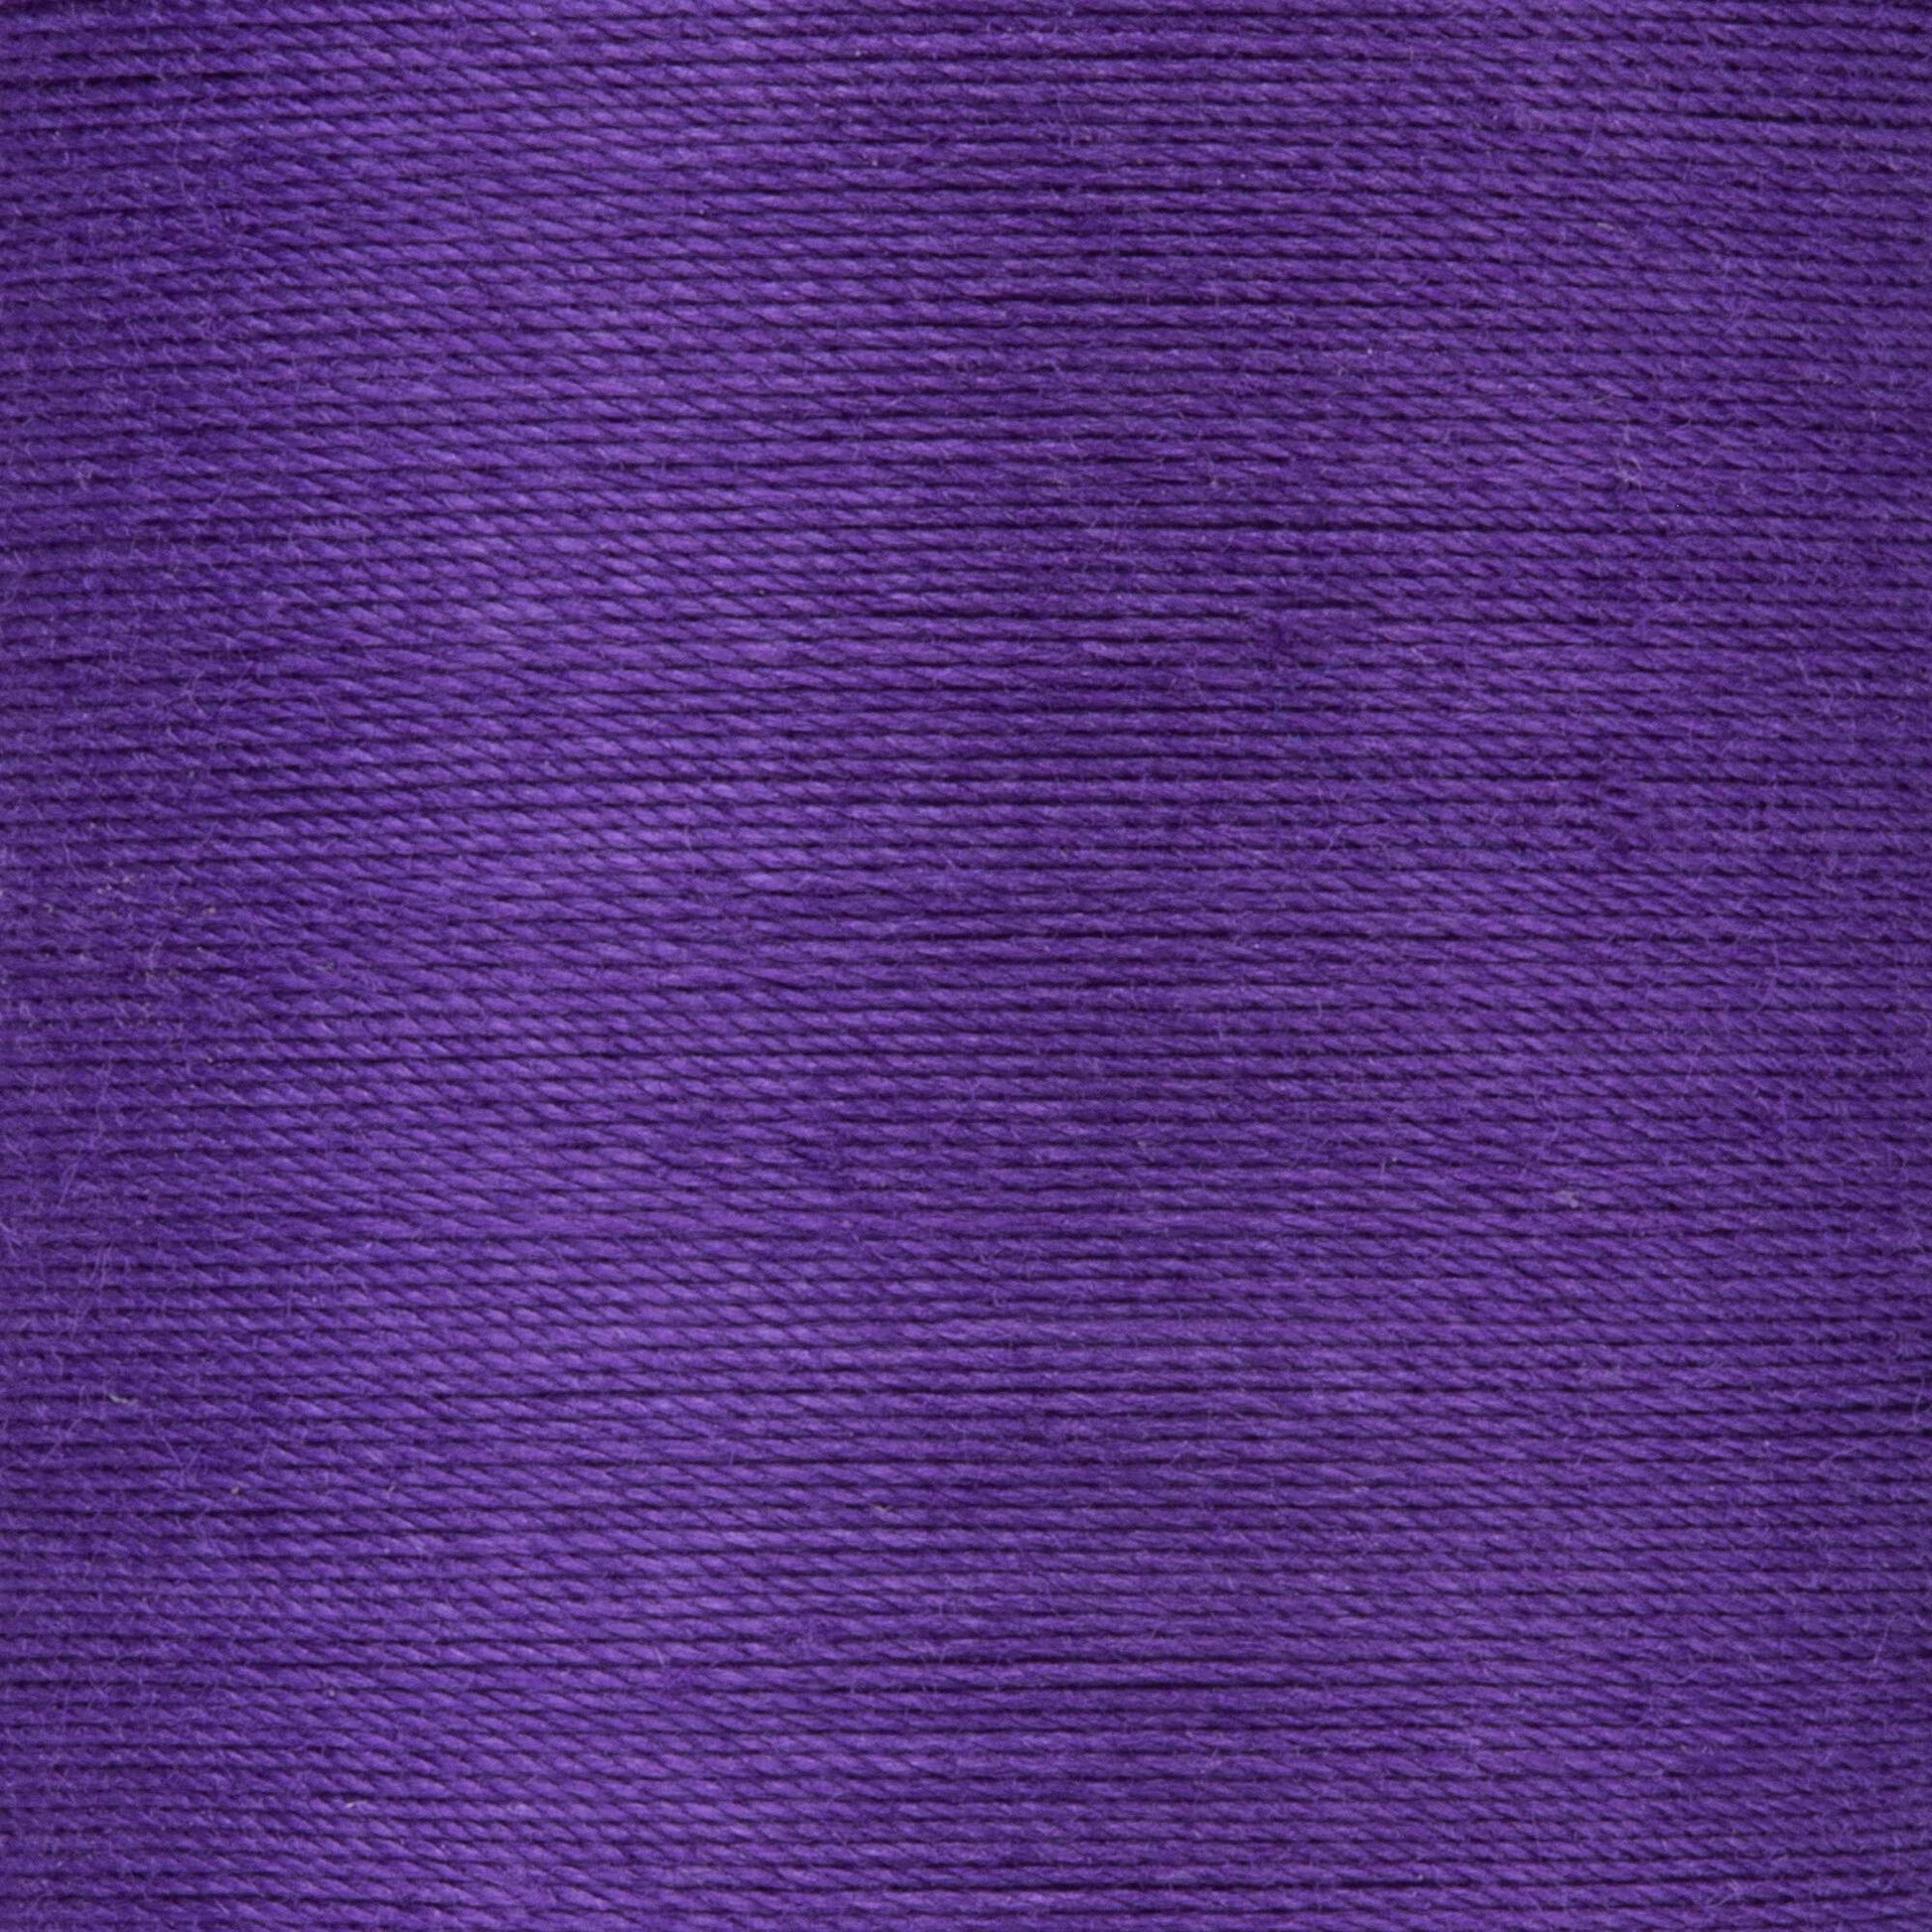 Coats & Clark Cotton Machine Quilting Thread (350 Yards) Deep Violet